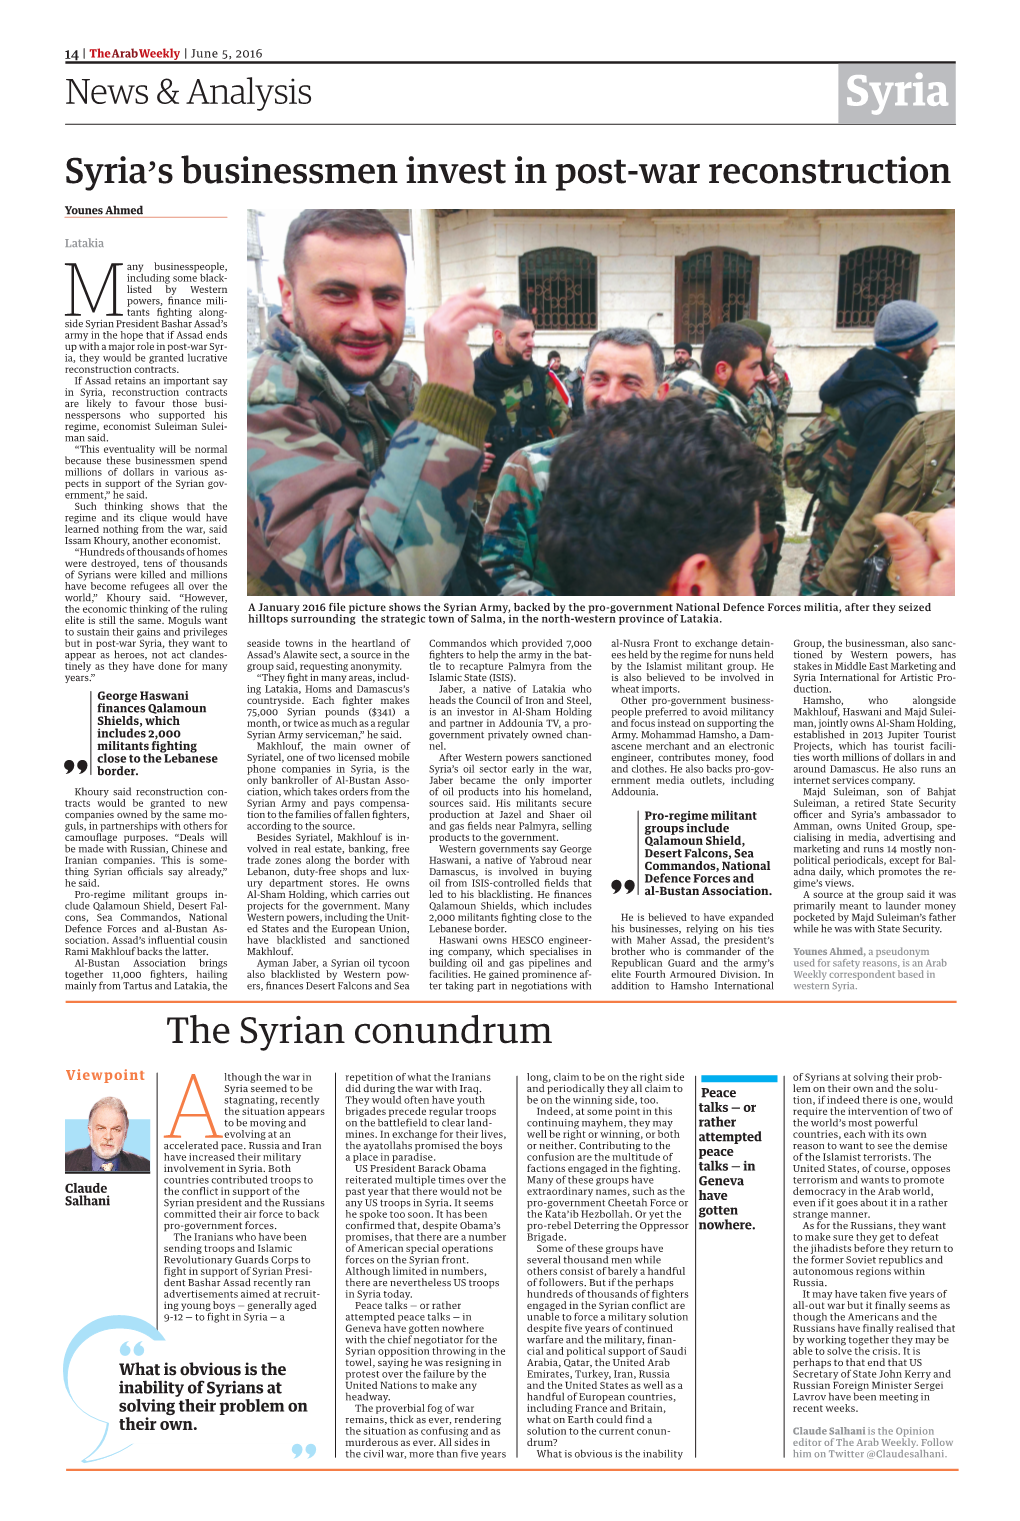 News & Analysis the Syrian Conundrum